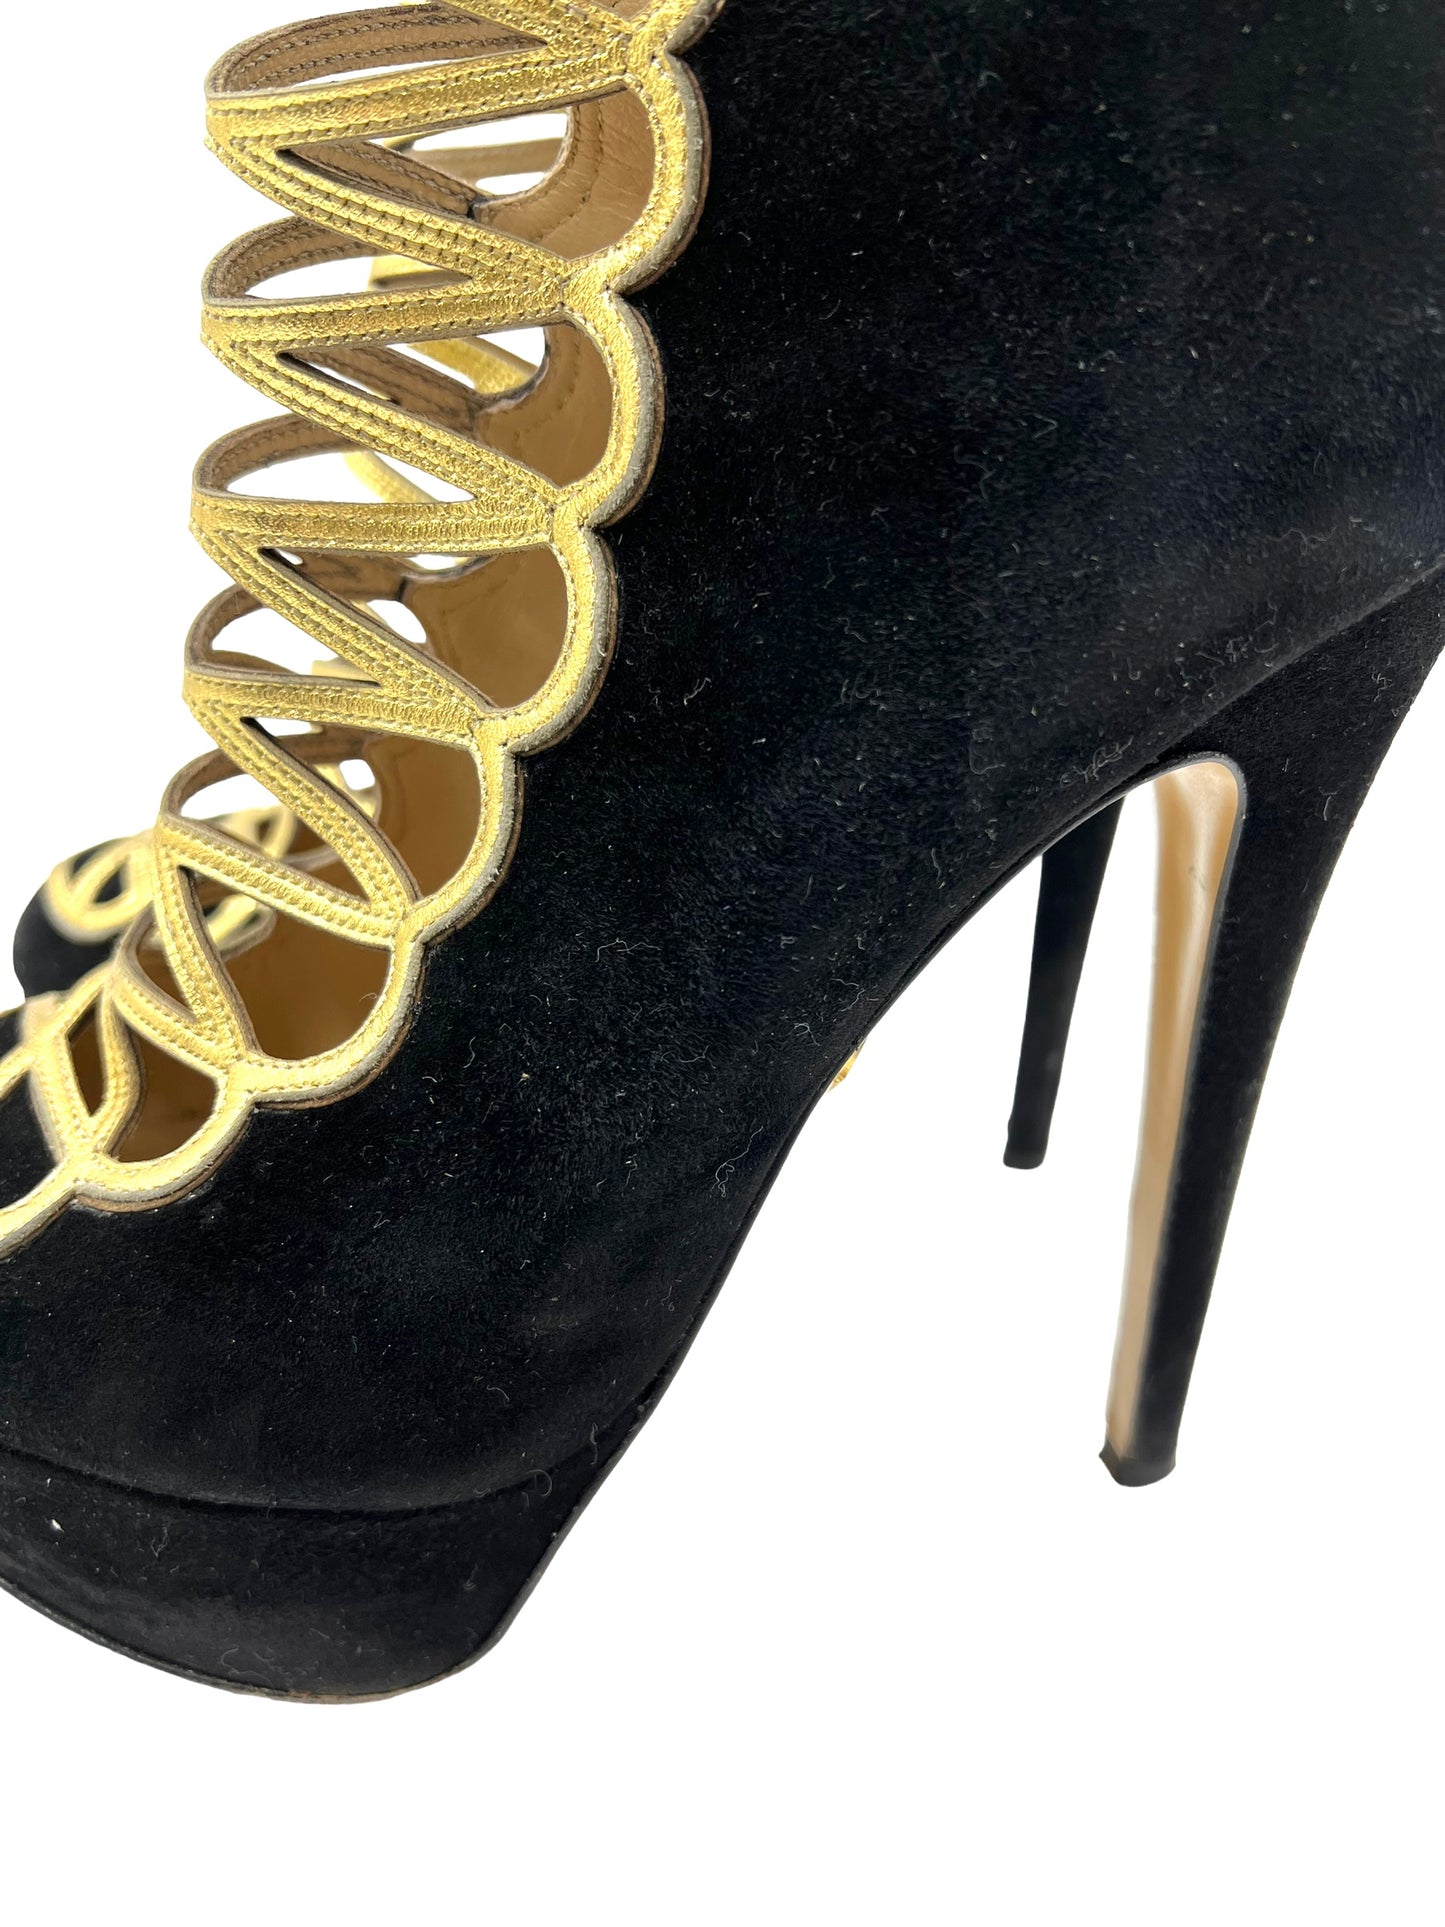 Charlotte Olympia Black Suede Size 39.5 'Zena' Platform Booties